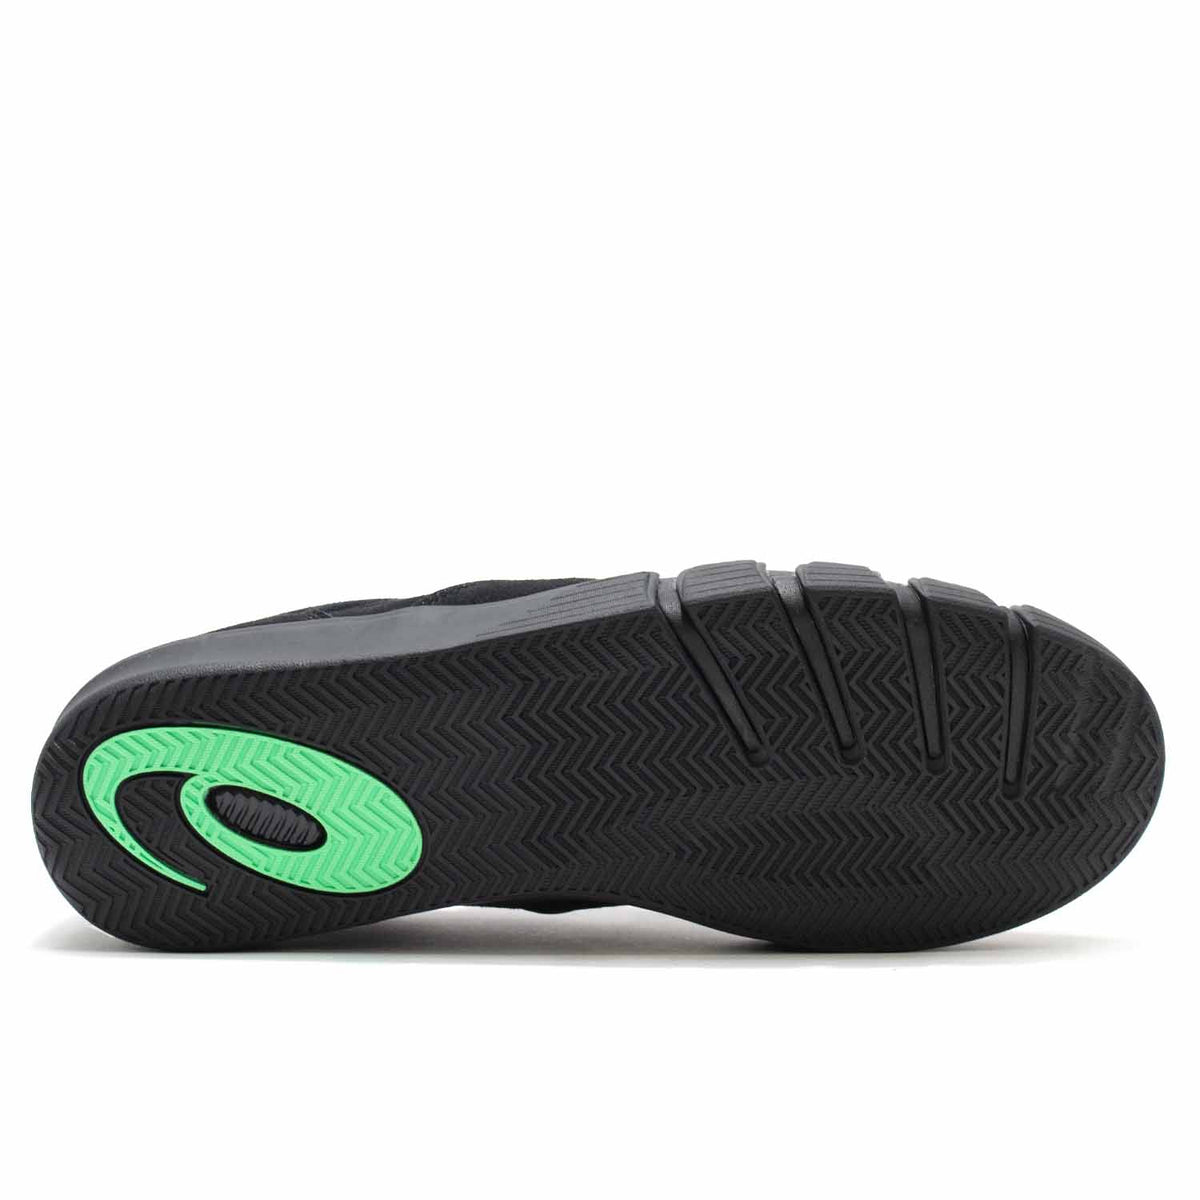 Bottom of Asics Black slip on shoe, black sole with large green asics A.